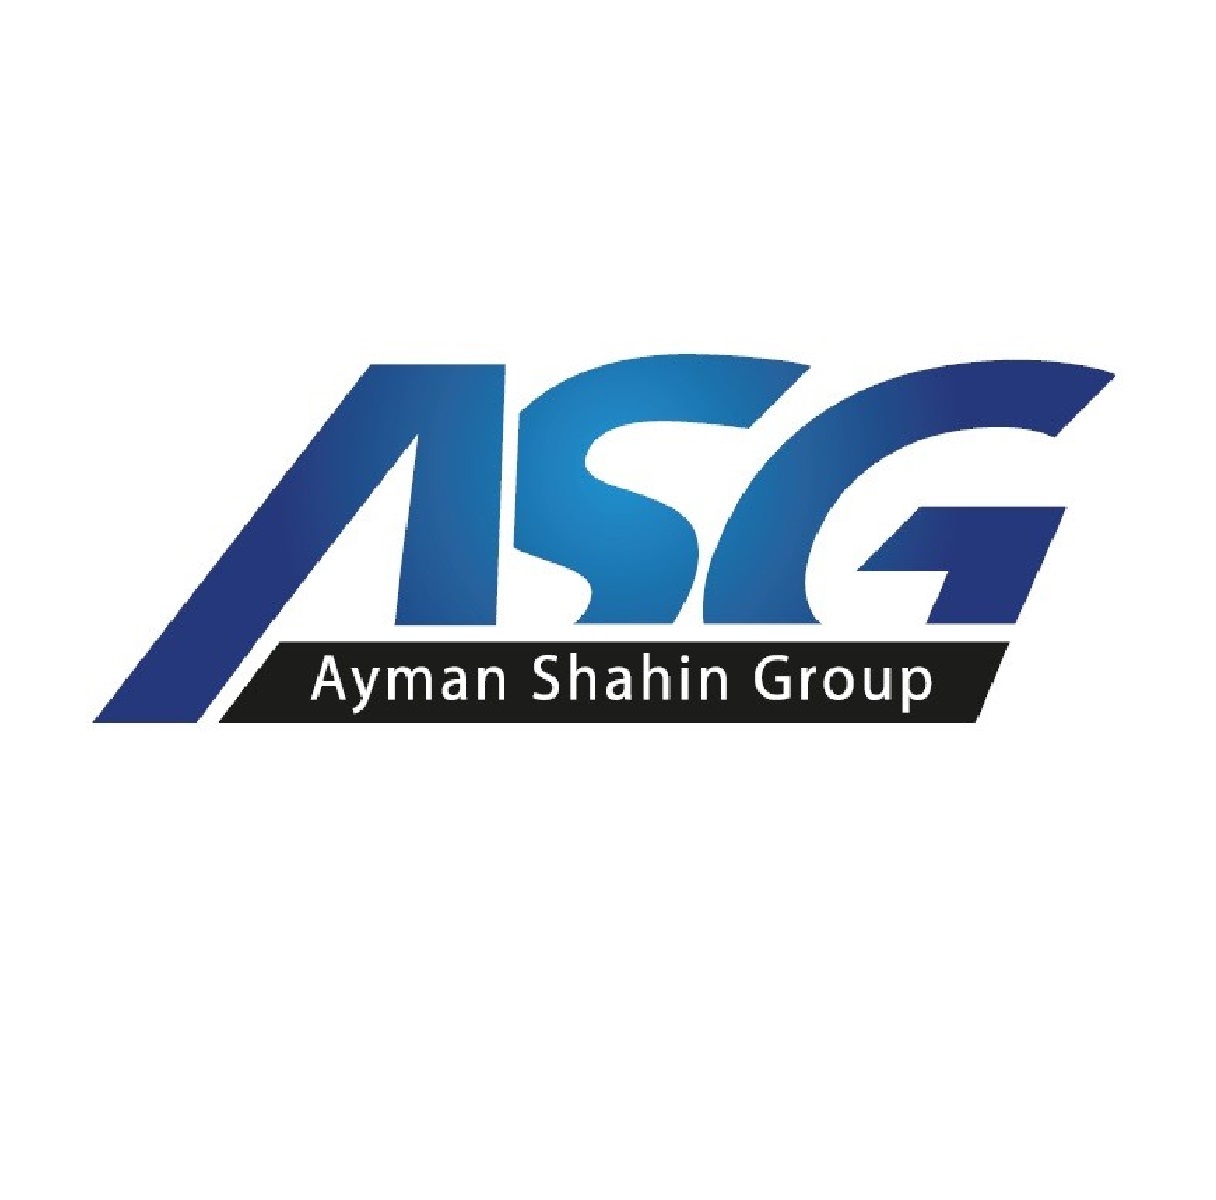 Ayman Shahin Group